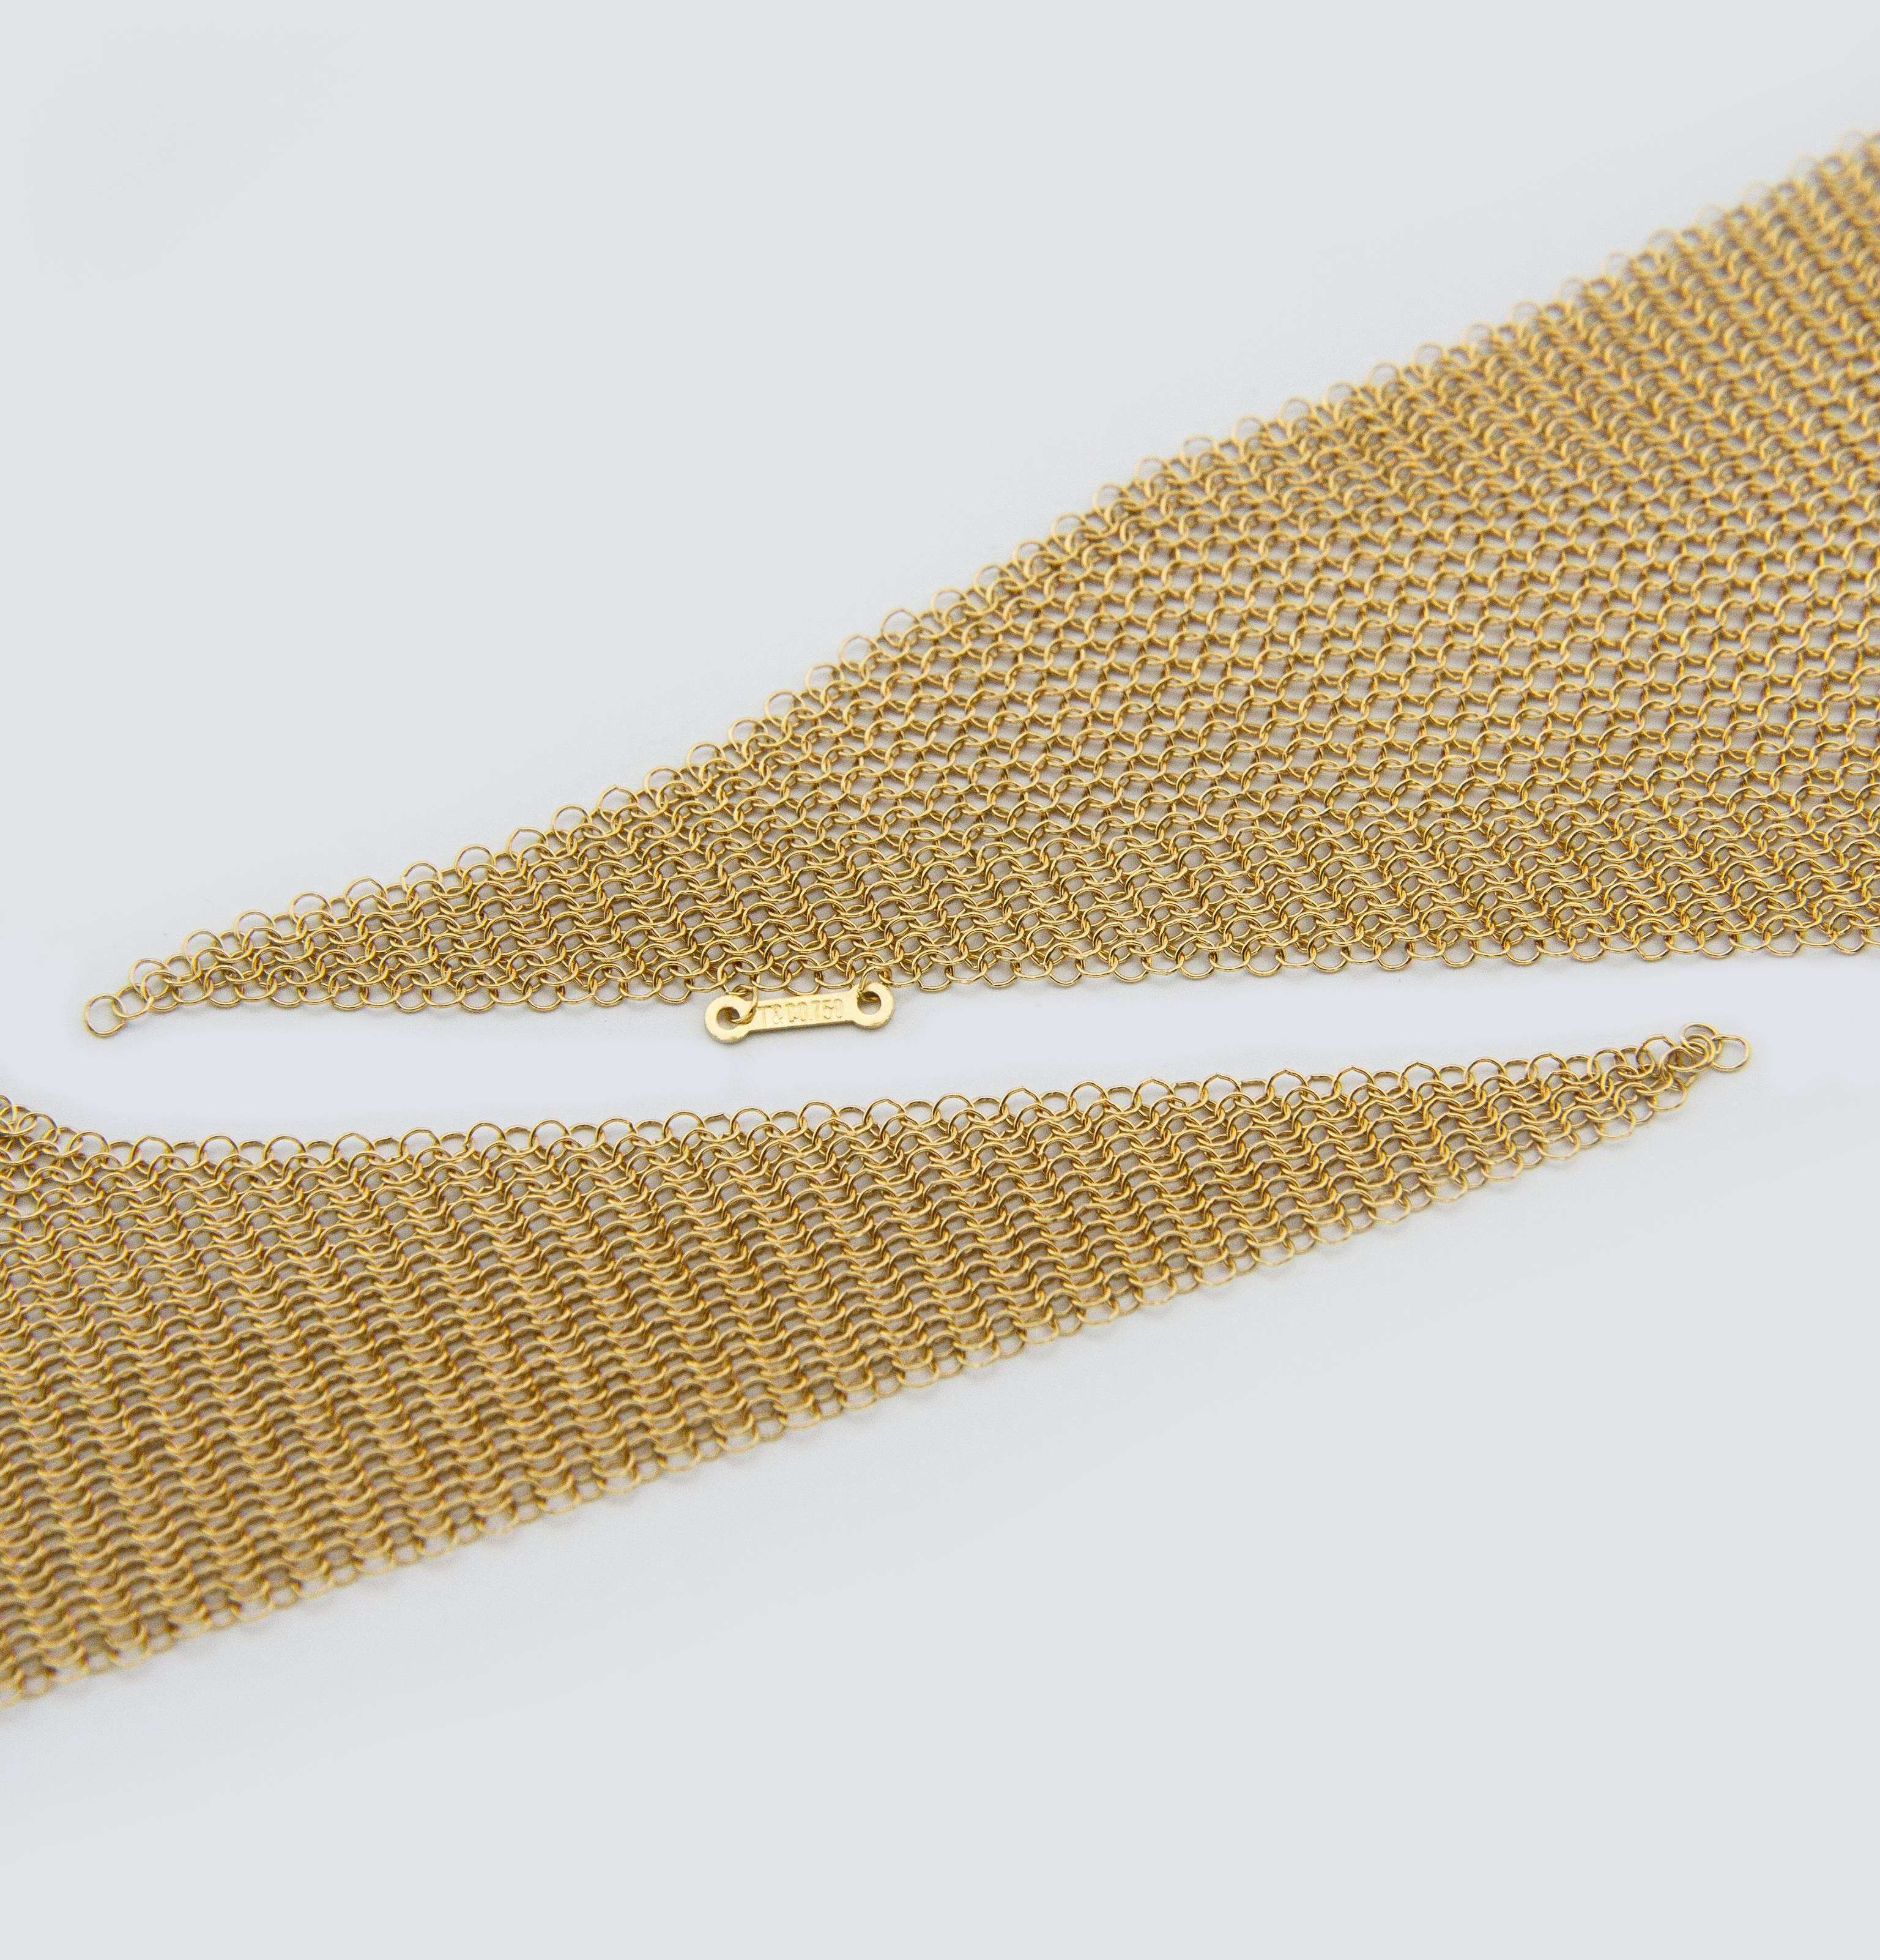 American Tiffany & Co. 'Elsa Peretti' Mesh Scarf Necklace in 18k Gold